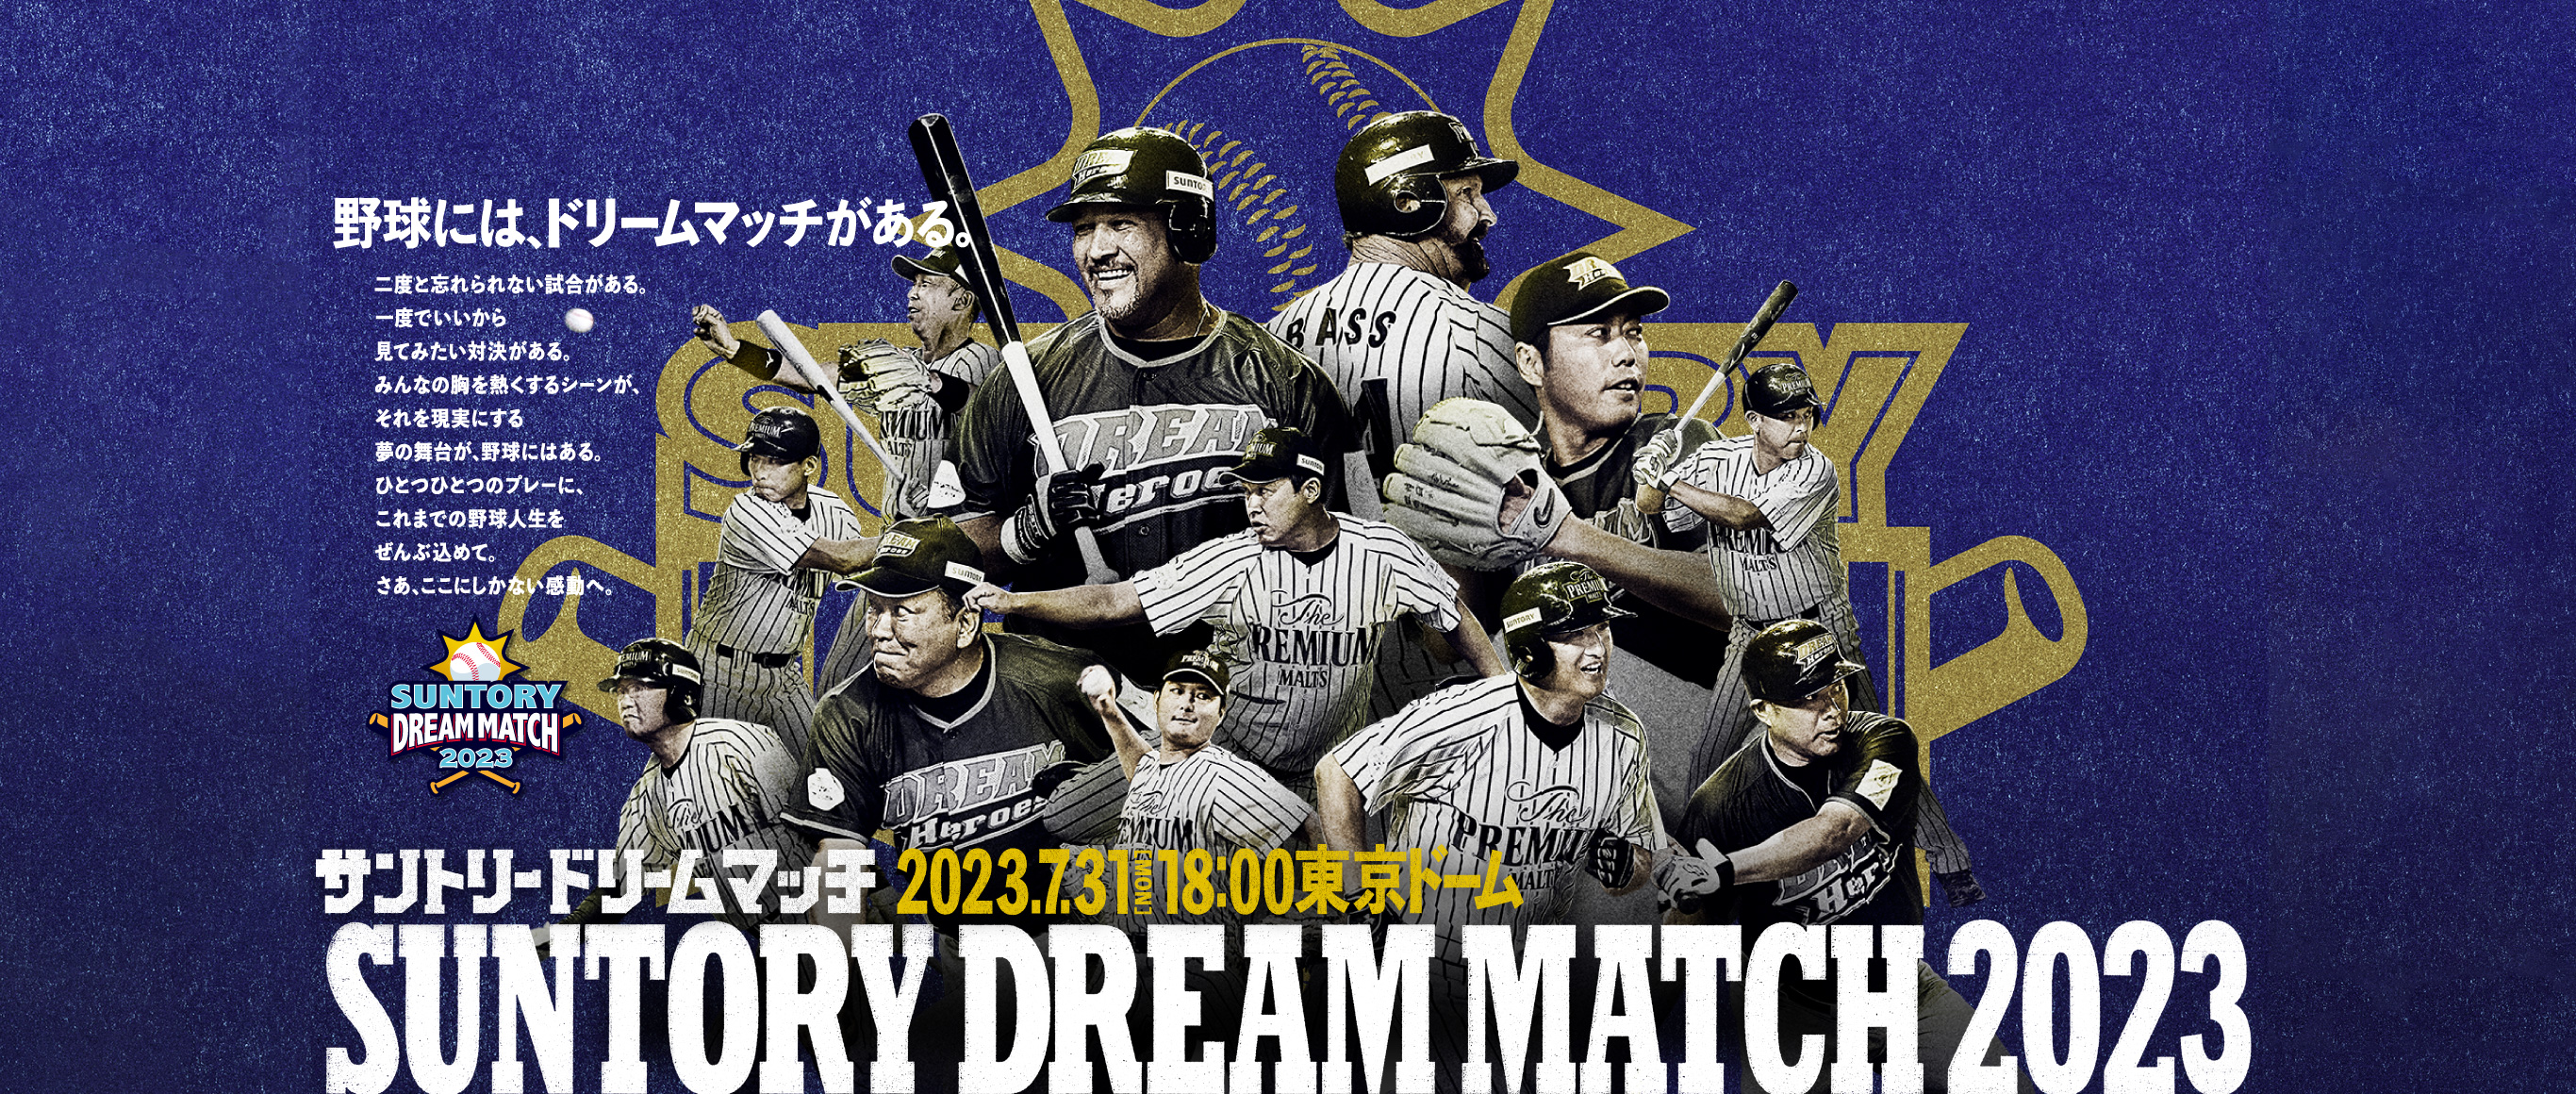 SUNTORY DREAM MATCH 2022 - 2022.8.1(MON)18:00 東京ドーム